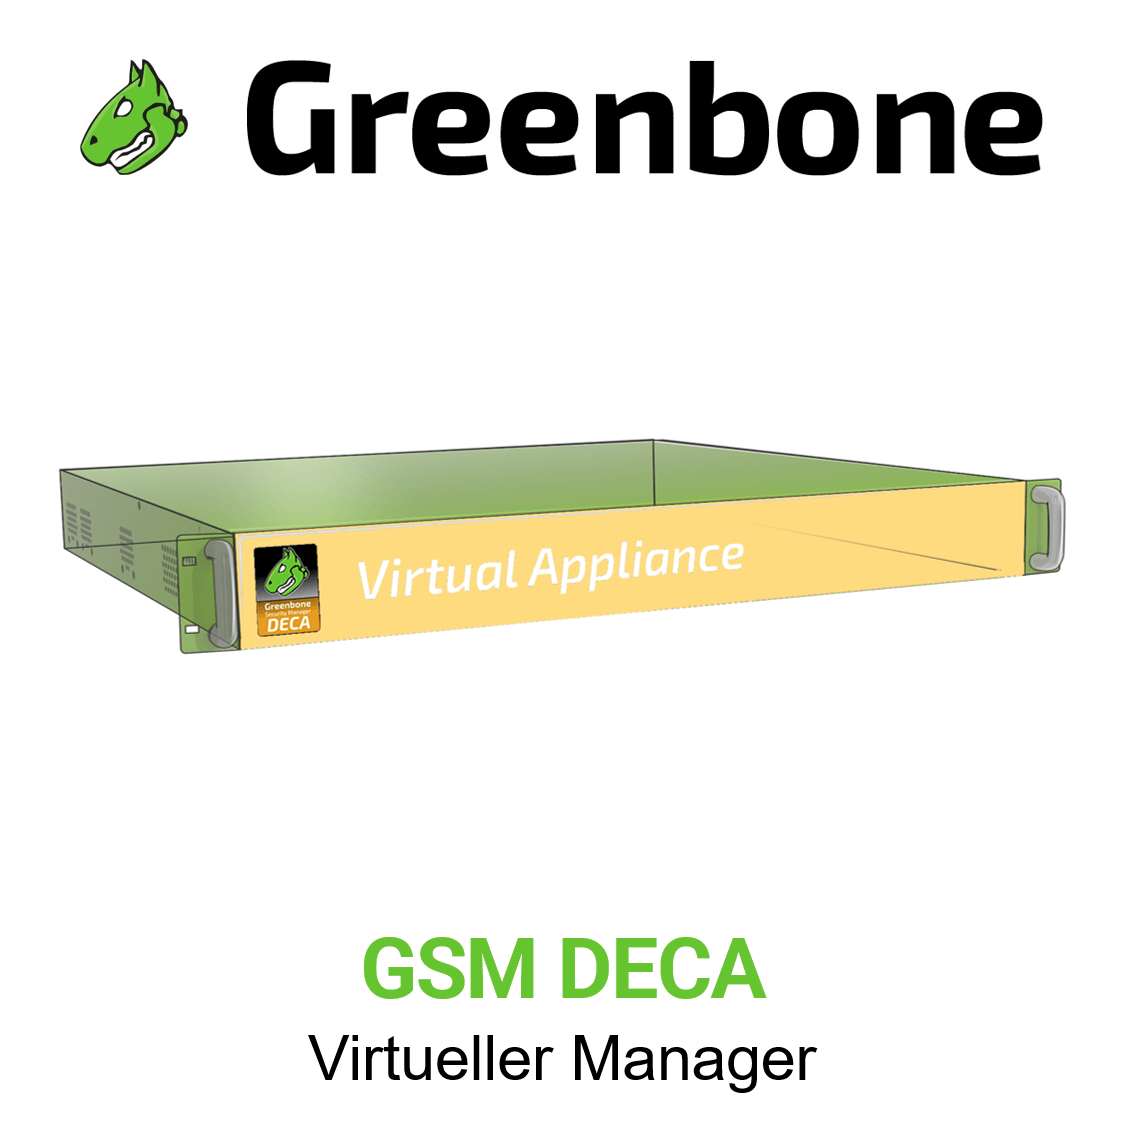 Greenbone Enterprise GSM DECA Virtuelle Appliance